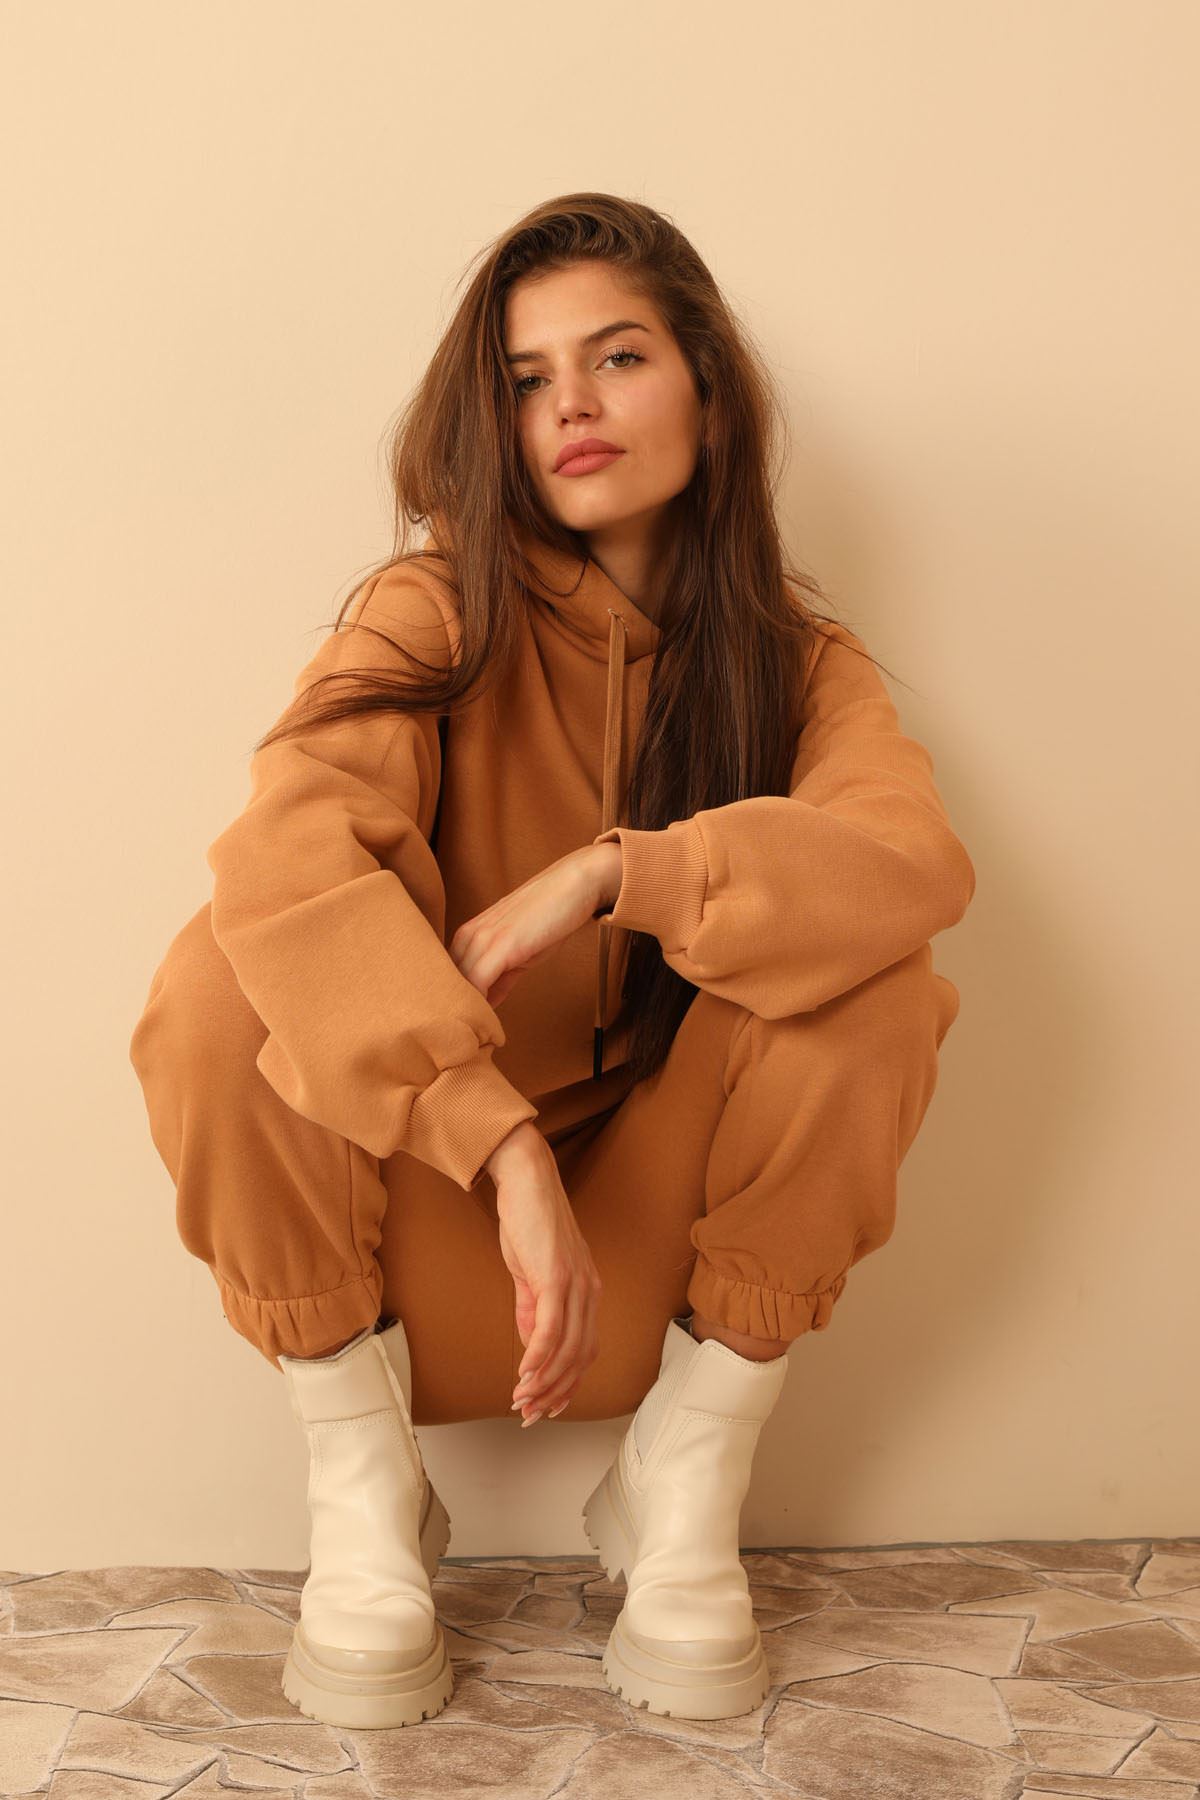 Third Knit With Wool İnside Fabric Hooded Hip Height Oversize Women Sweatshirt - Light Brown